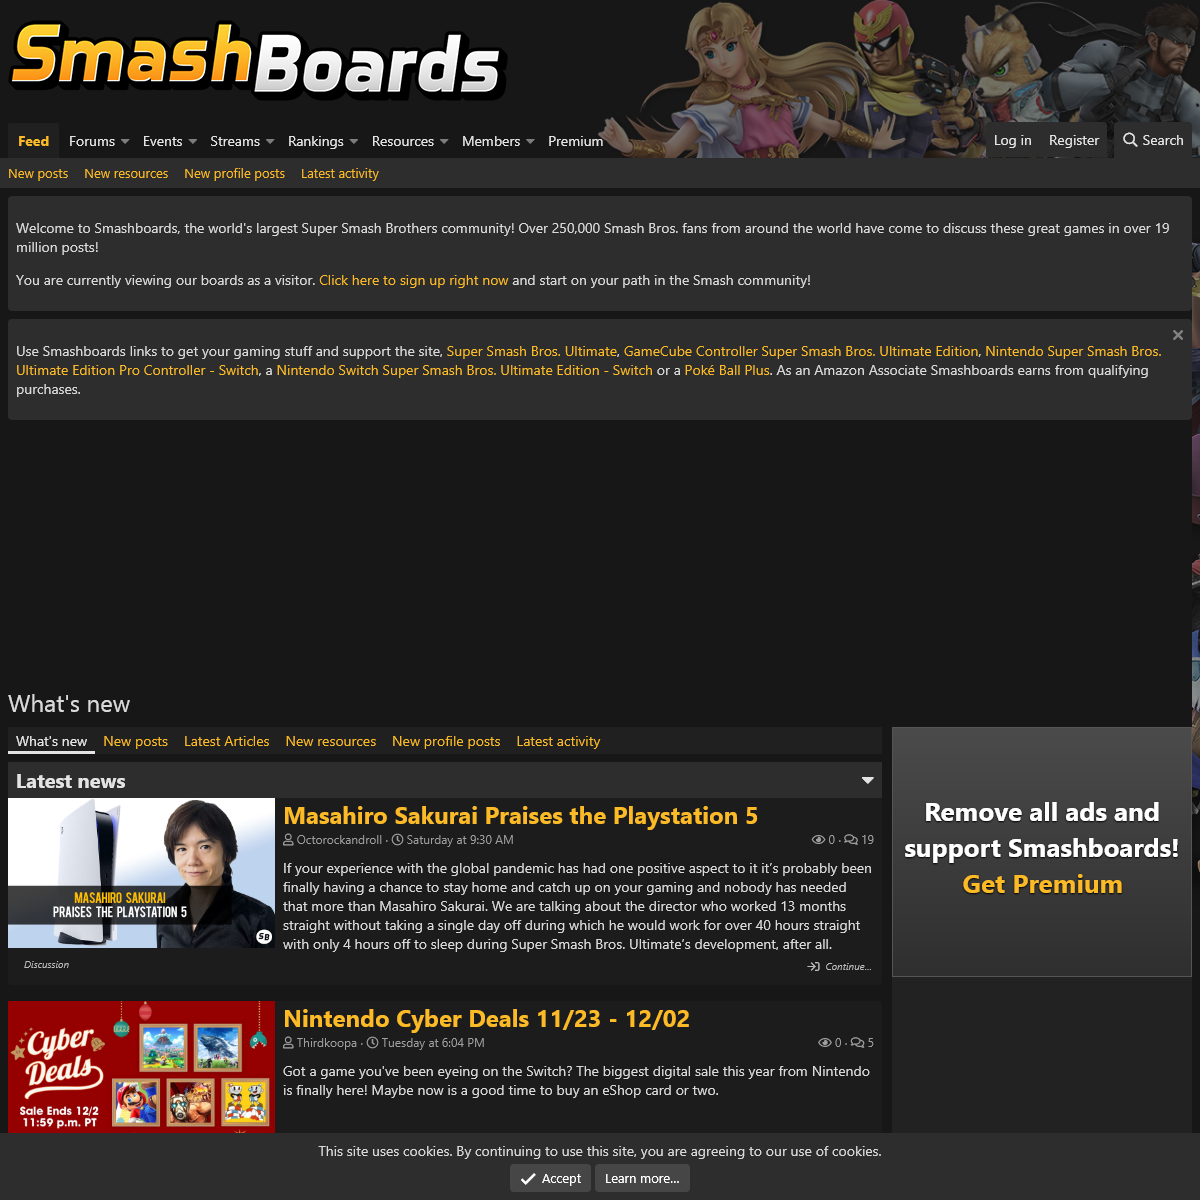 A complete backup of smashboards.com